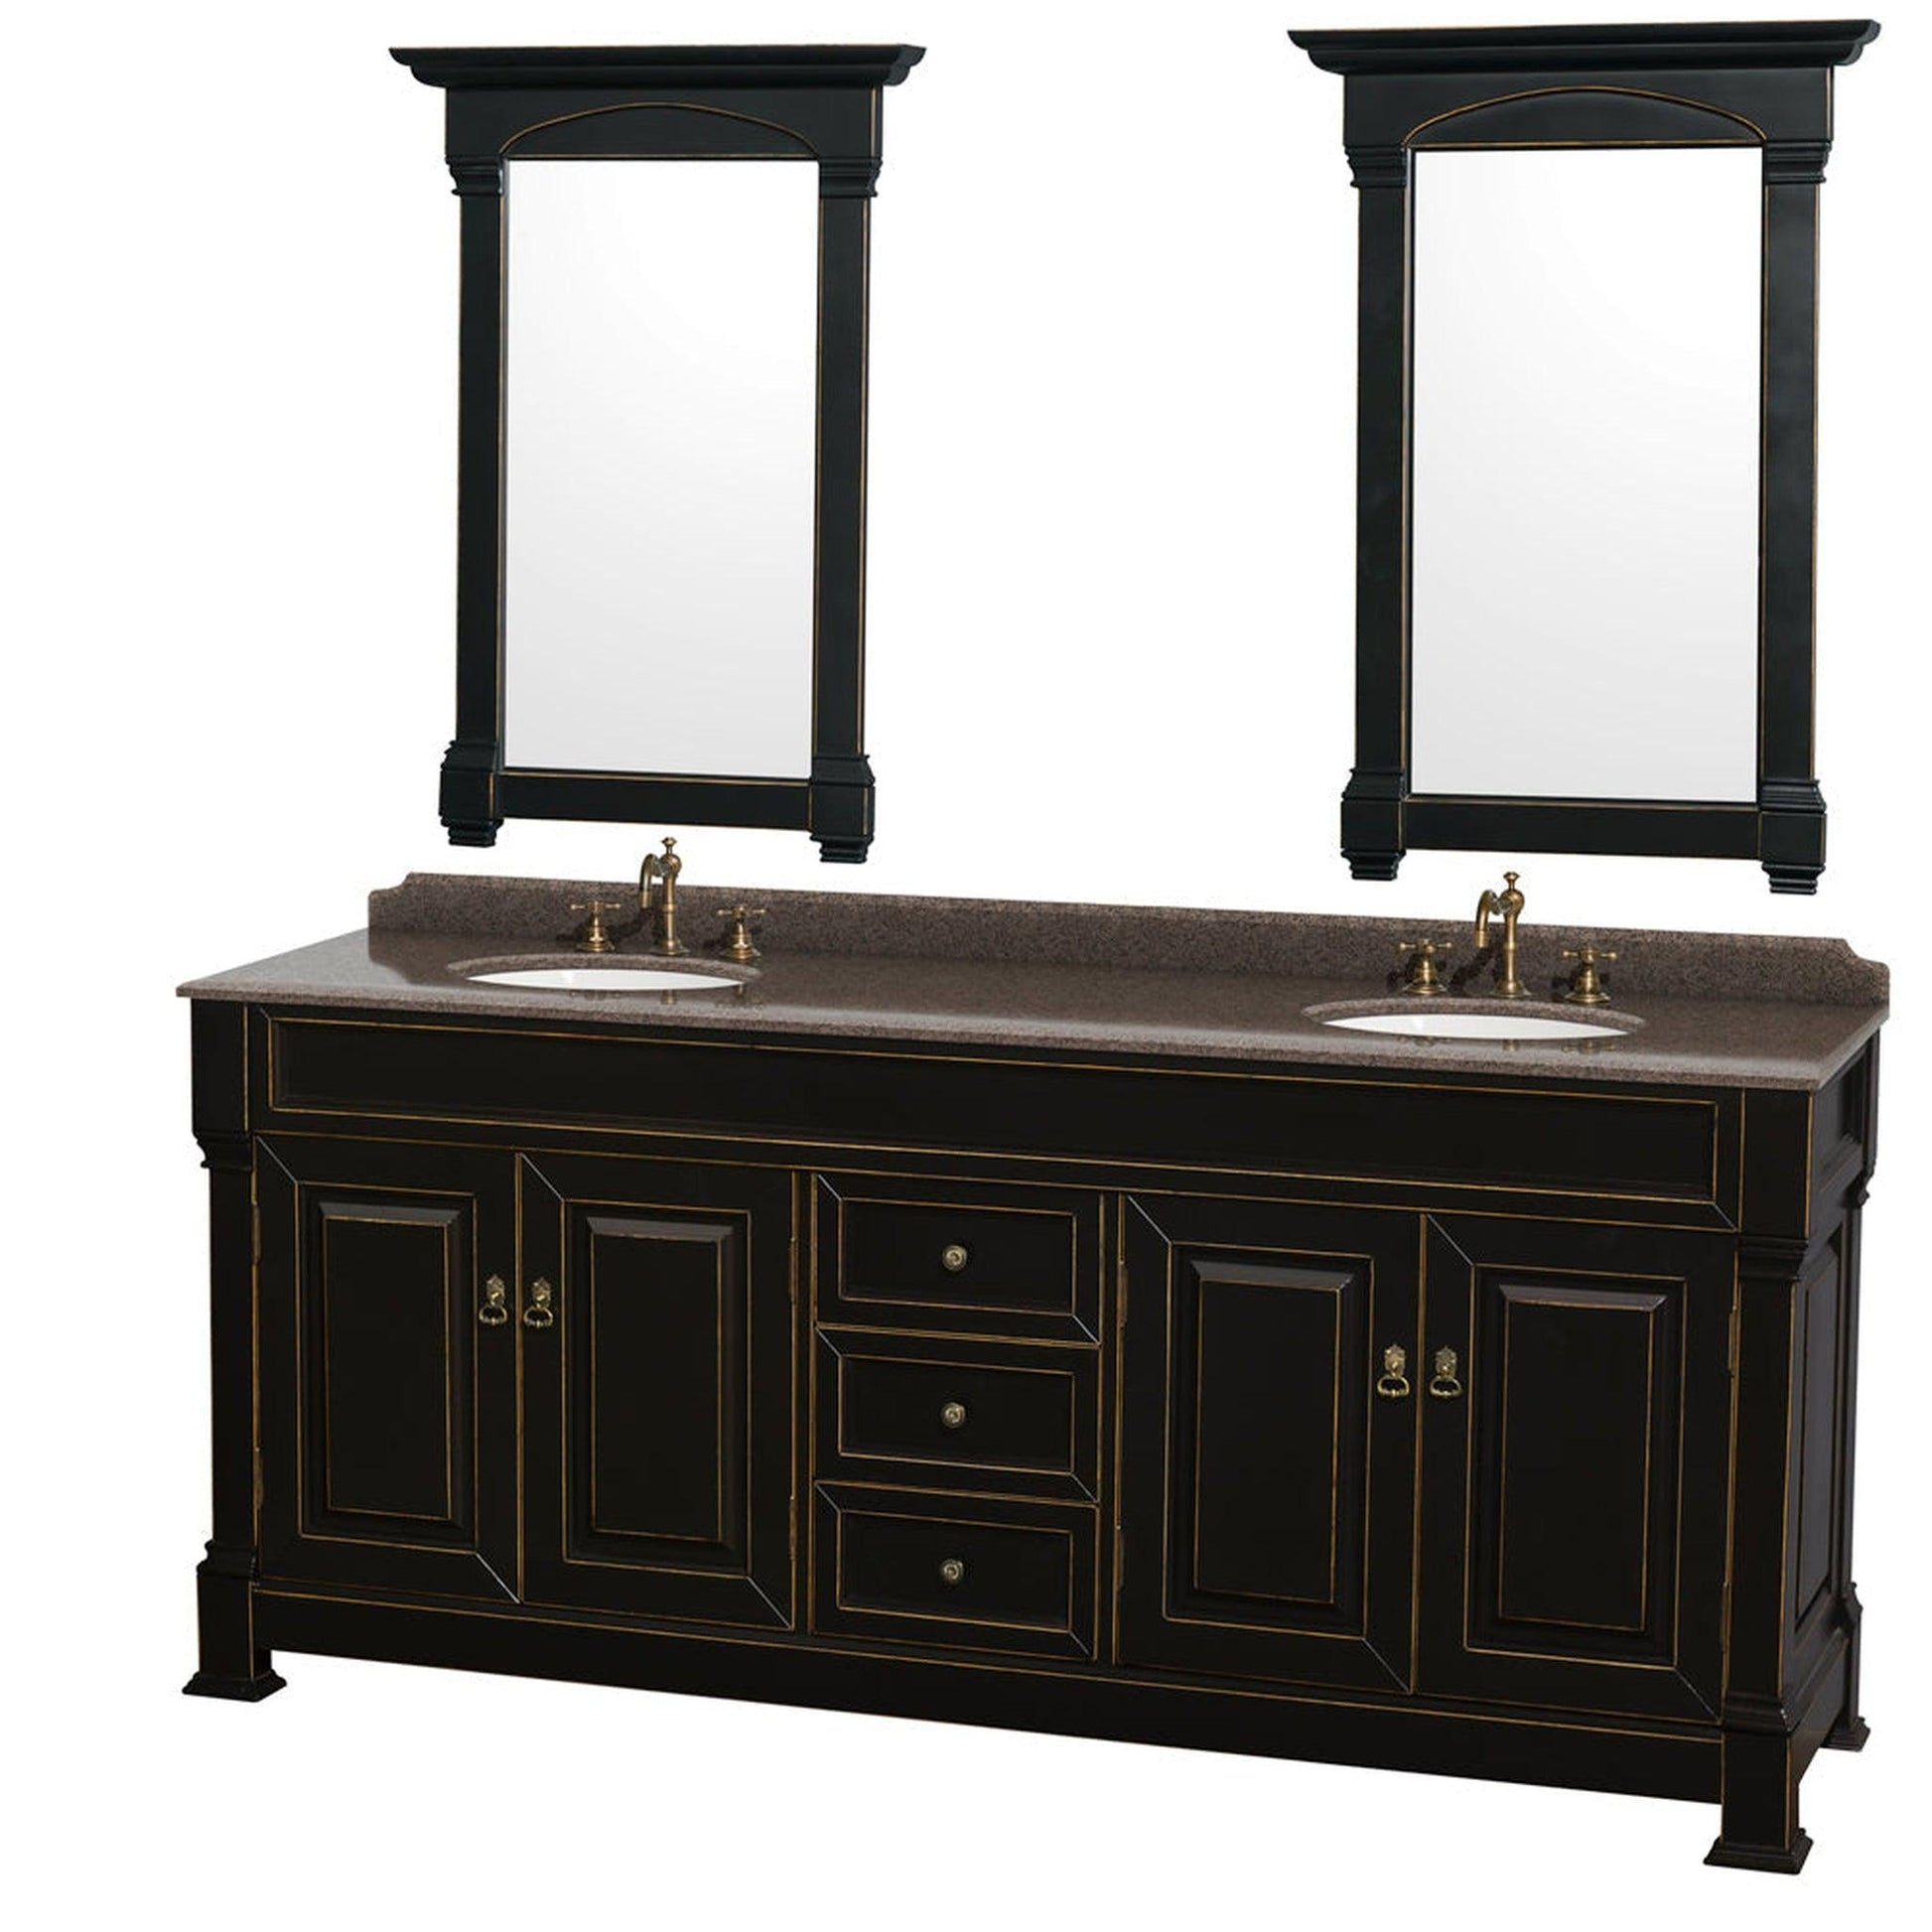 Wyndham Collection Andover 80" Double Bathroom Vanity in Black With Imperial Brown Granite Countertop, Undermount Oval Sink & 28" Mirror